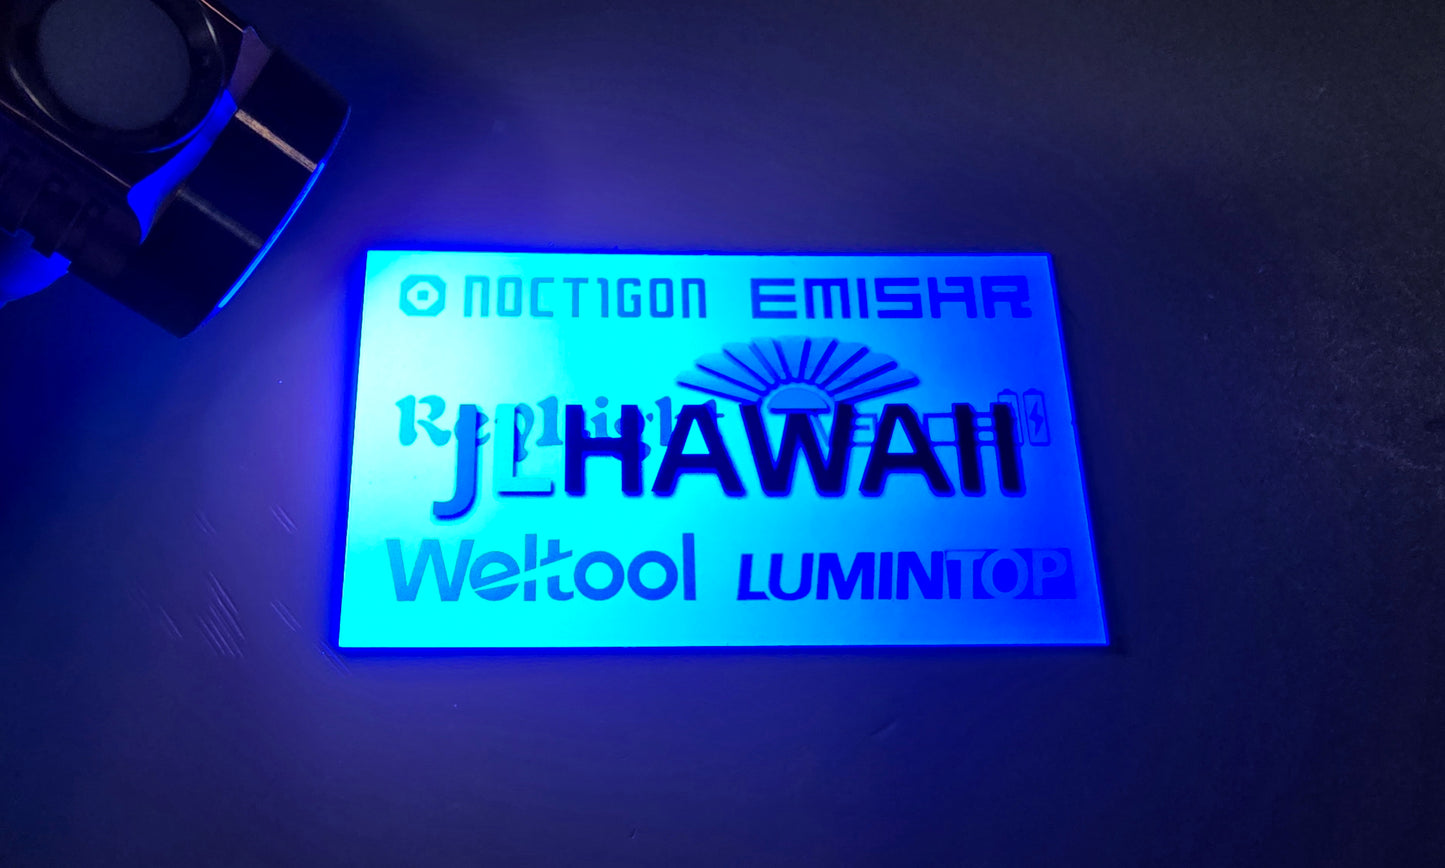 Emisar D4V2/D4K Titanium Tint Ramp 8 x Mule High Power LED Flashlight